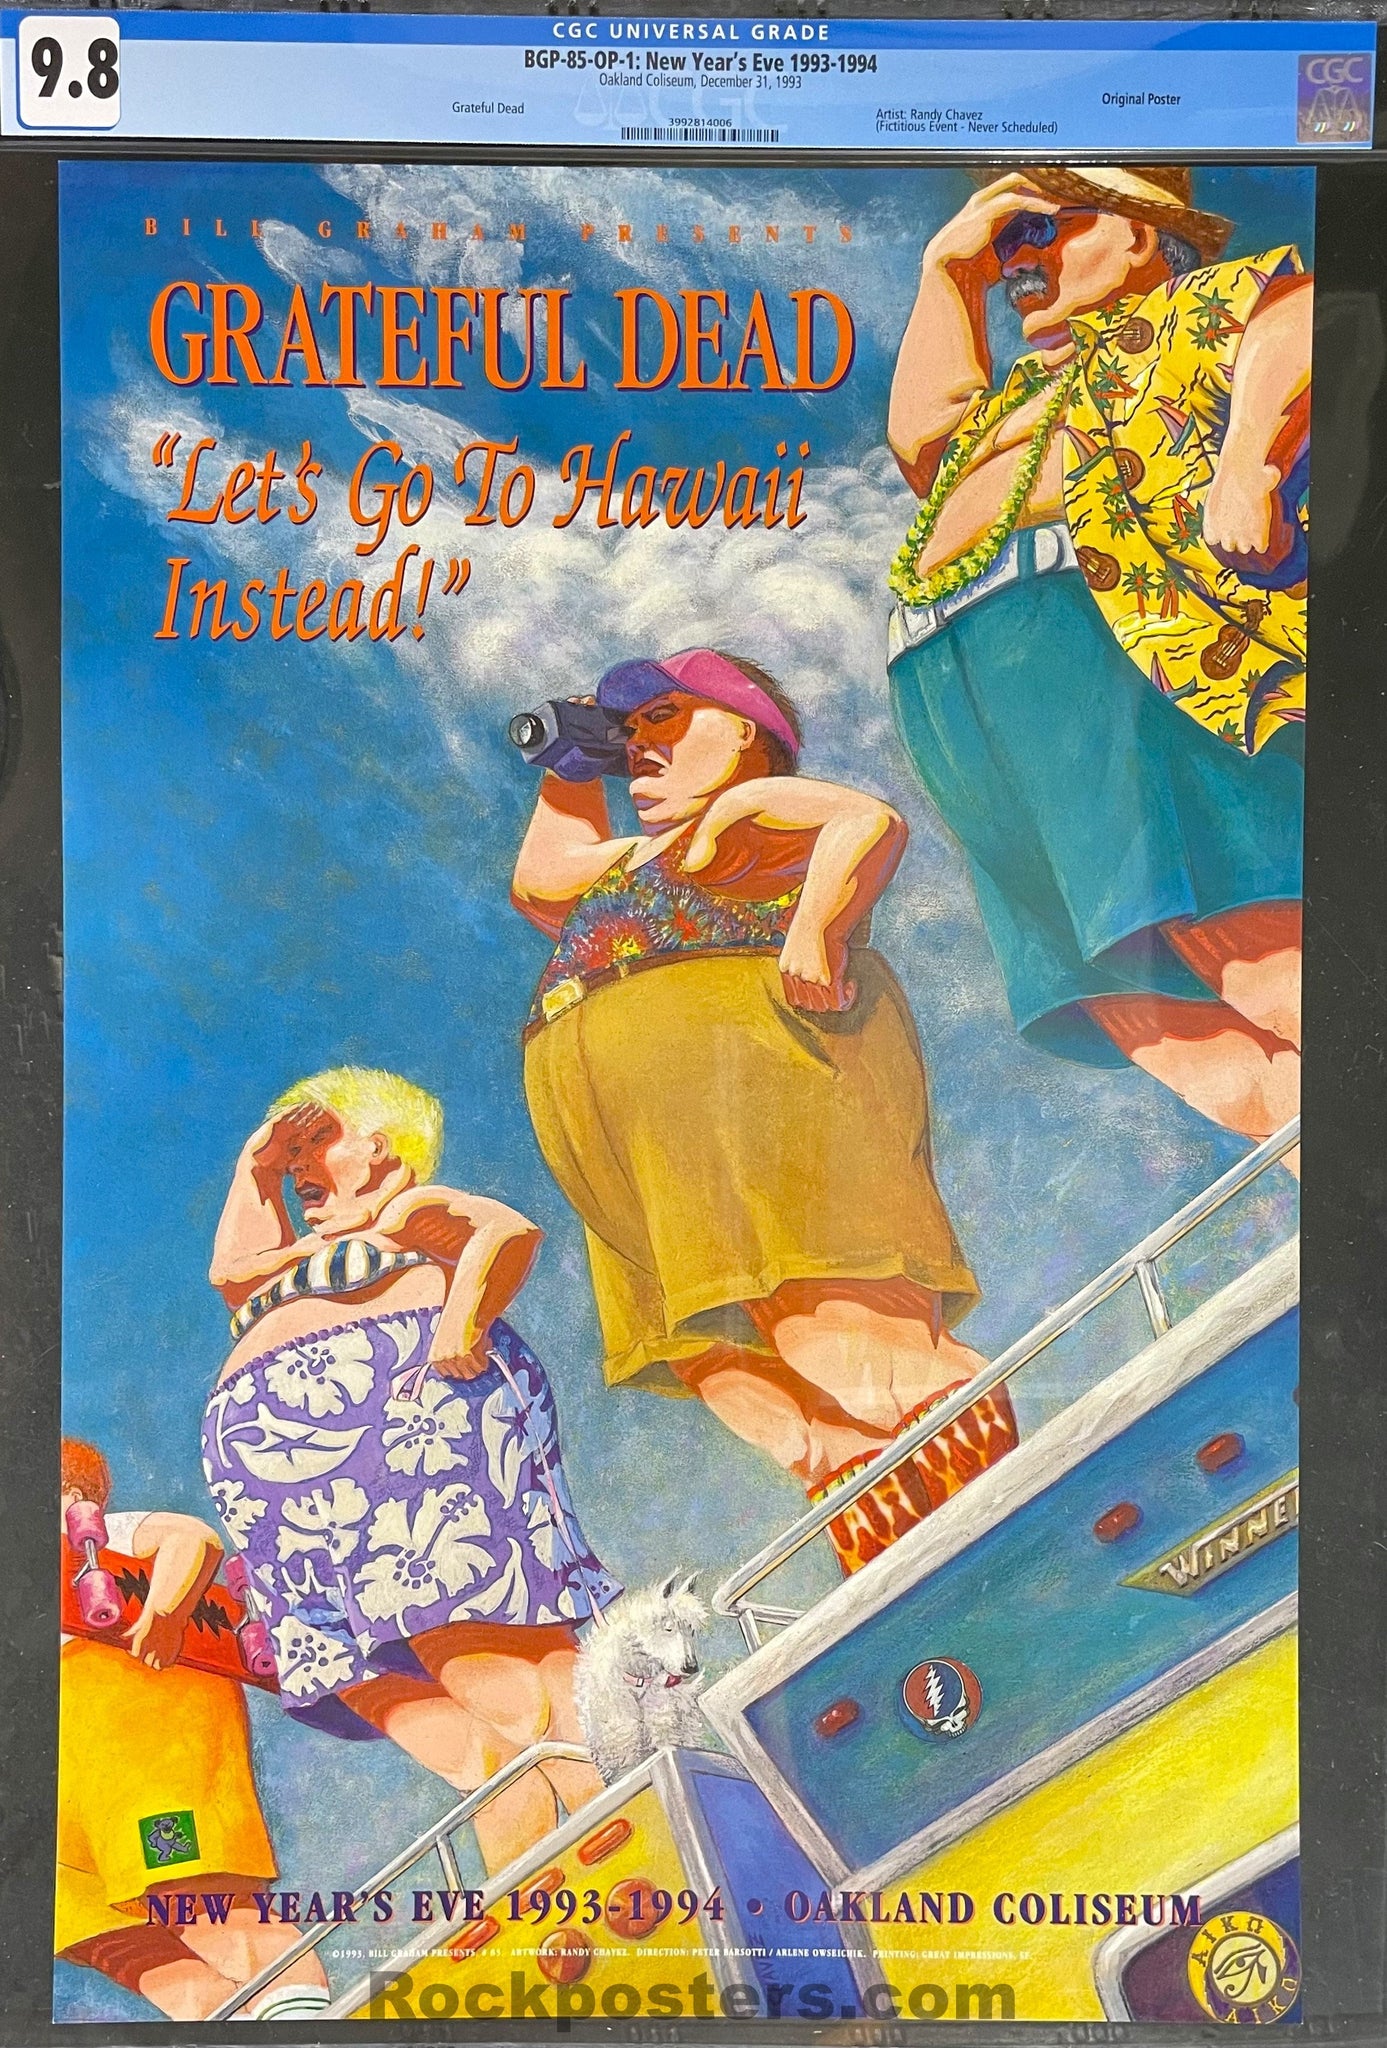 BGP-85 - Grateful Dead - New Year's 1993 Poster - Oakland Coliseum - CGC Graded 9.8